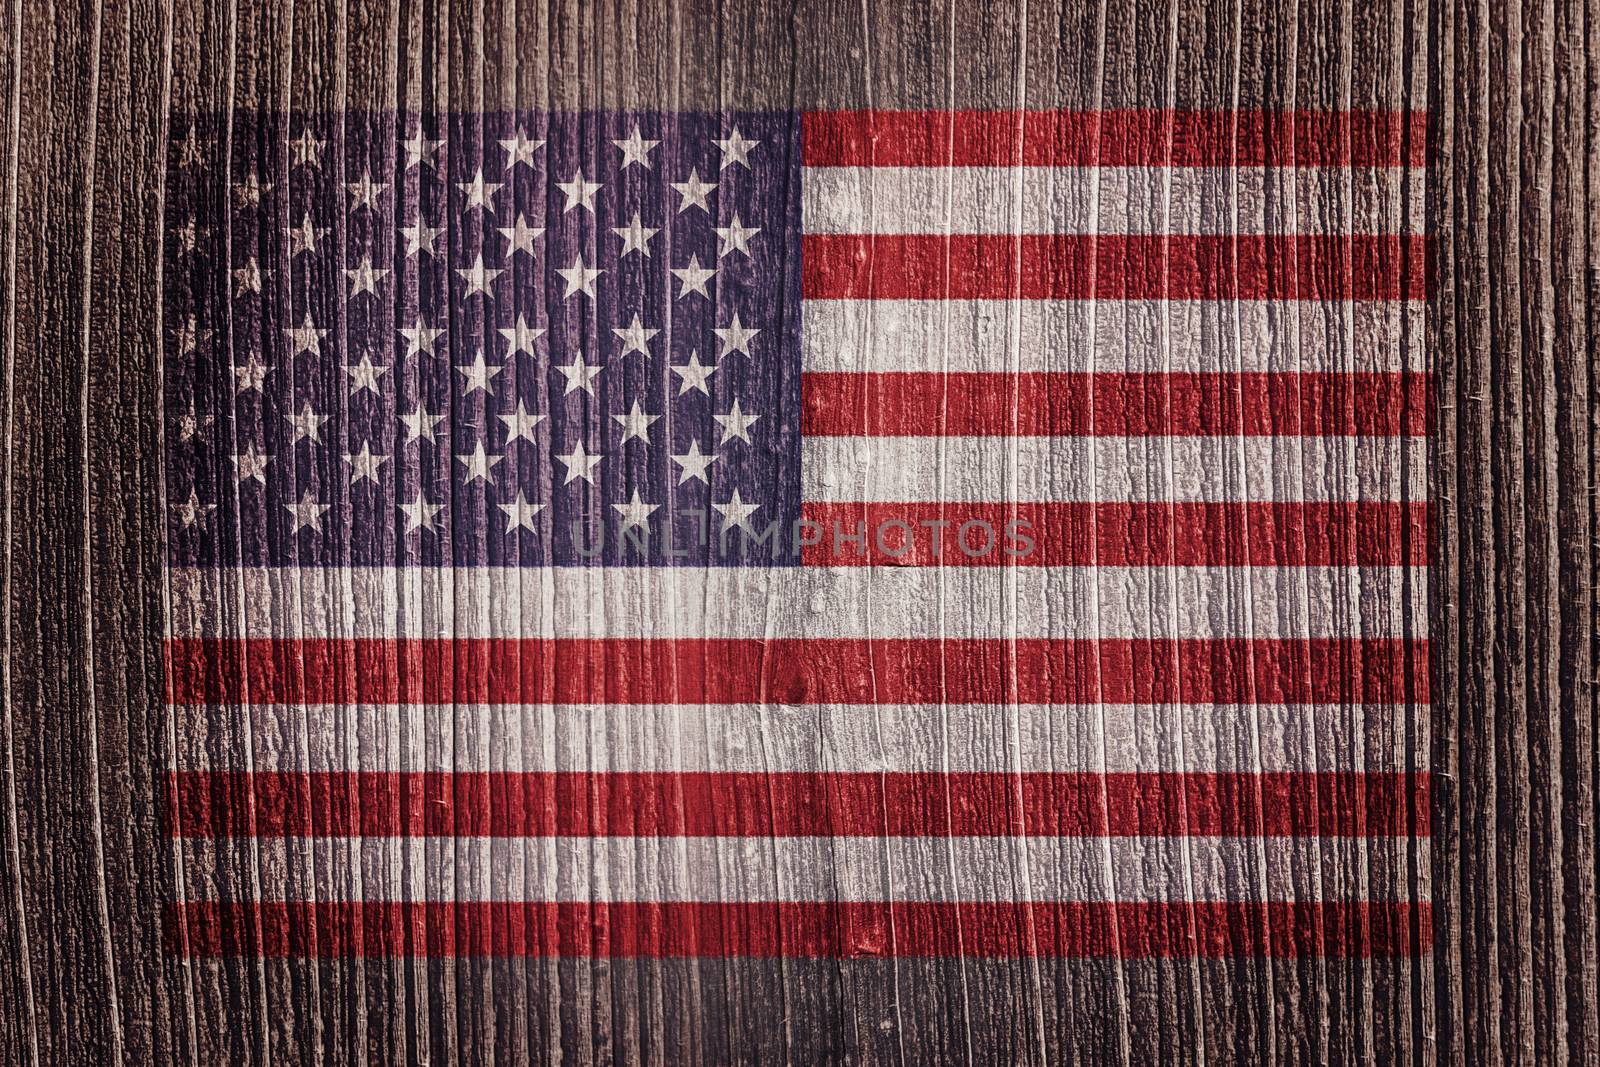 Usa national flag against wooden planks